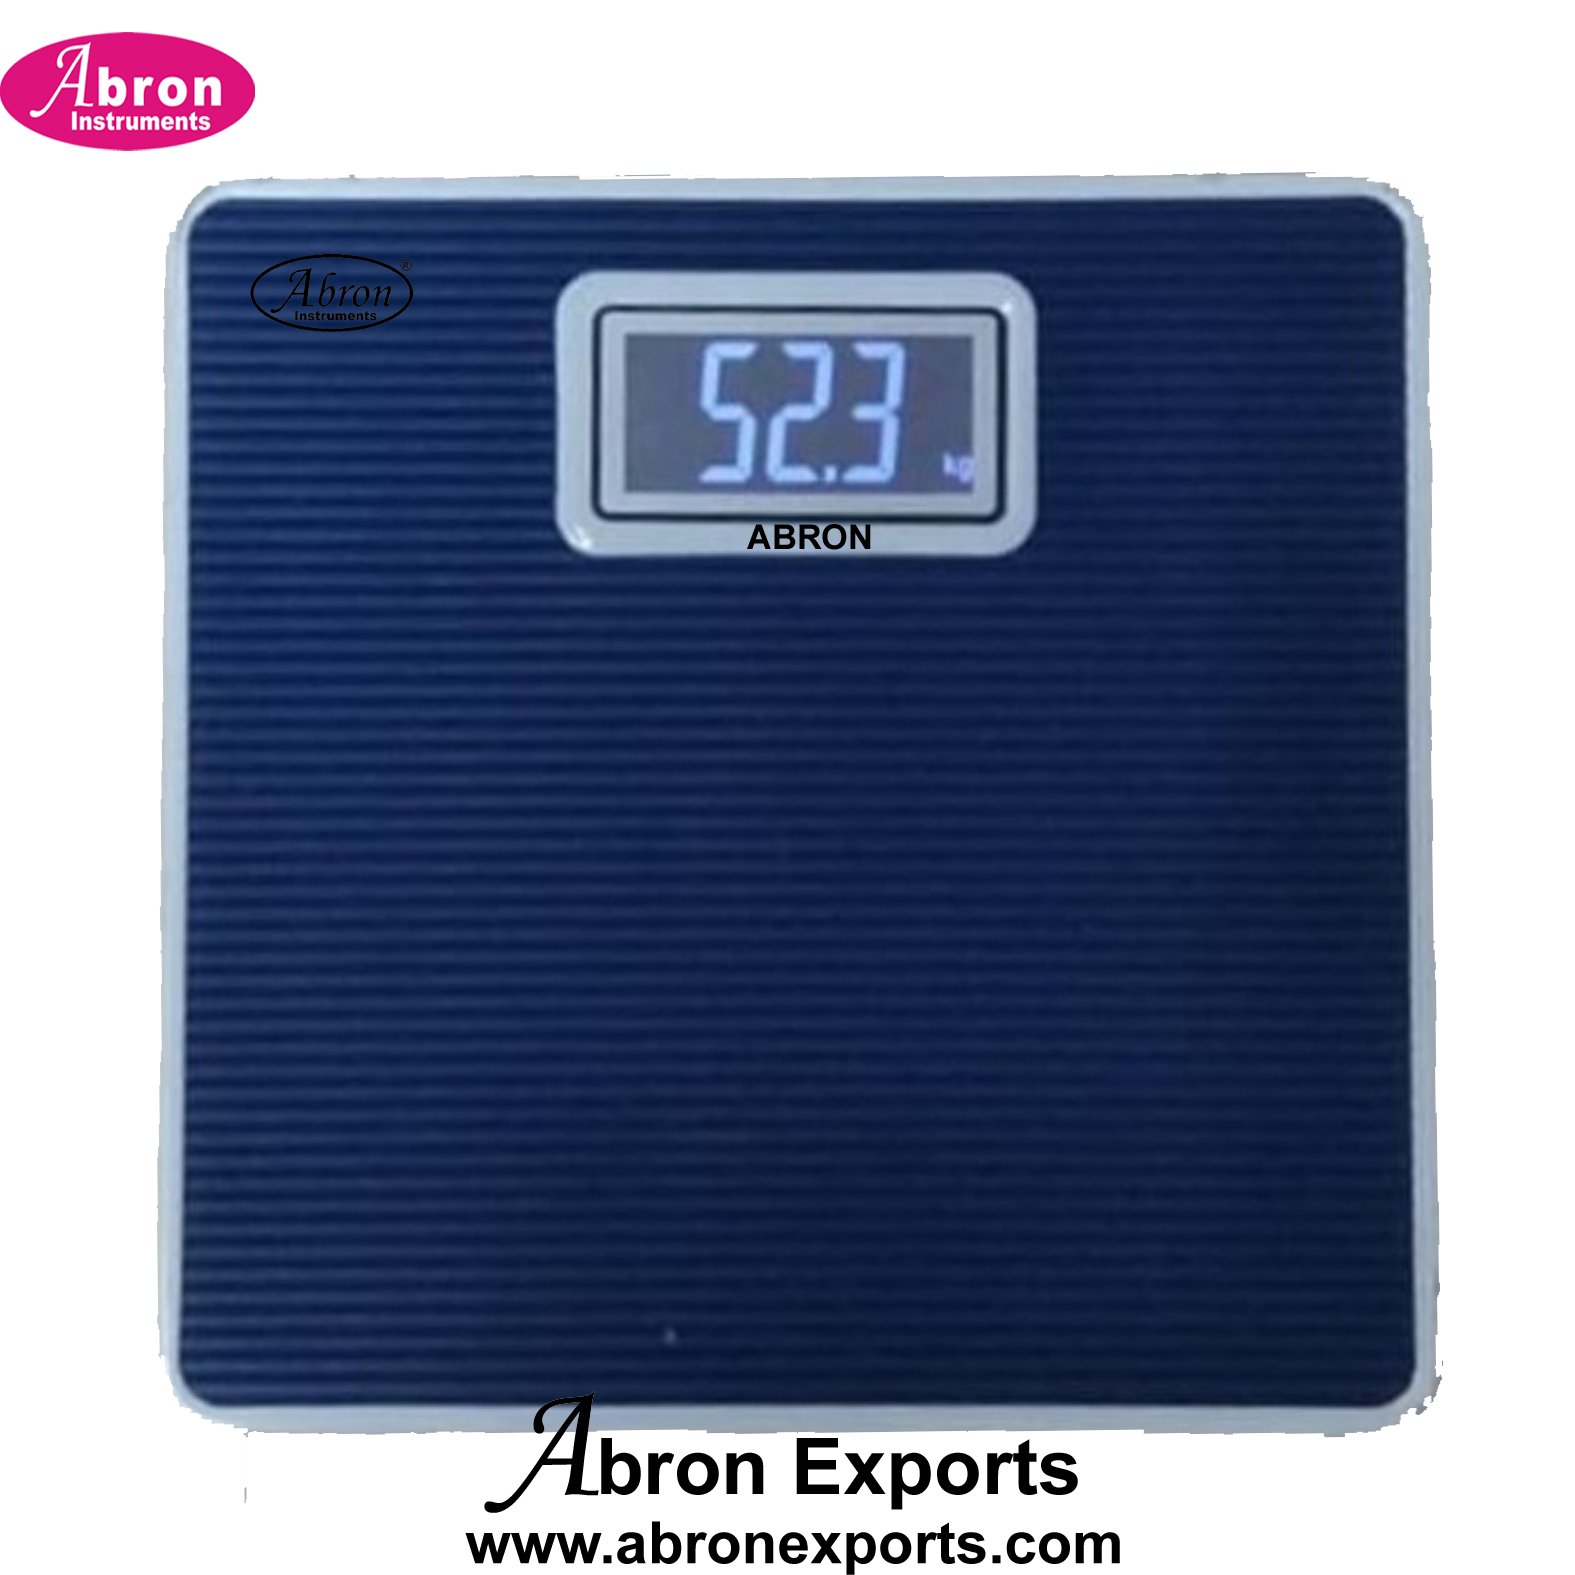 Balance Personal Weighing Scale Digital 150kg 100gm 0.1kg  330LB LCD Abon ABM-3255PD 